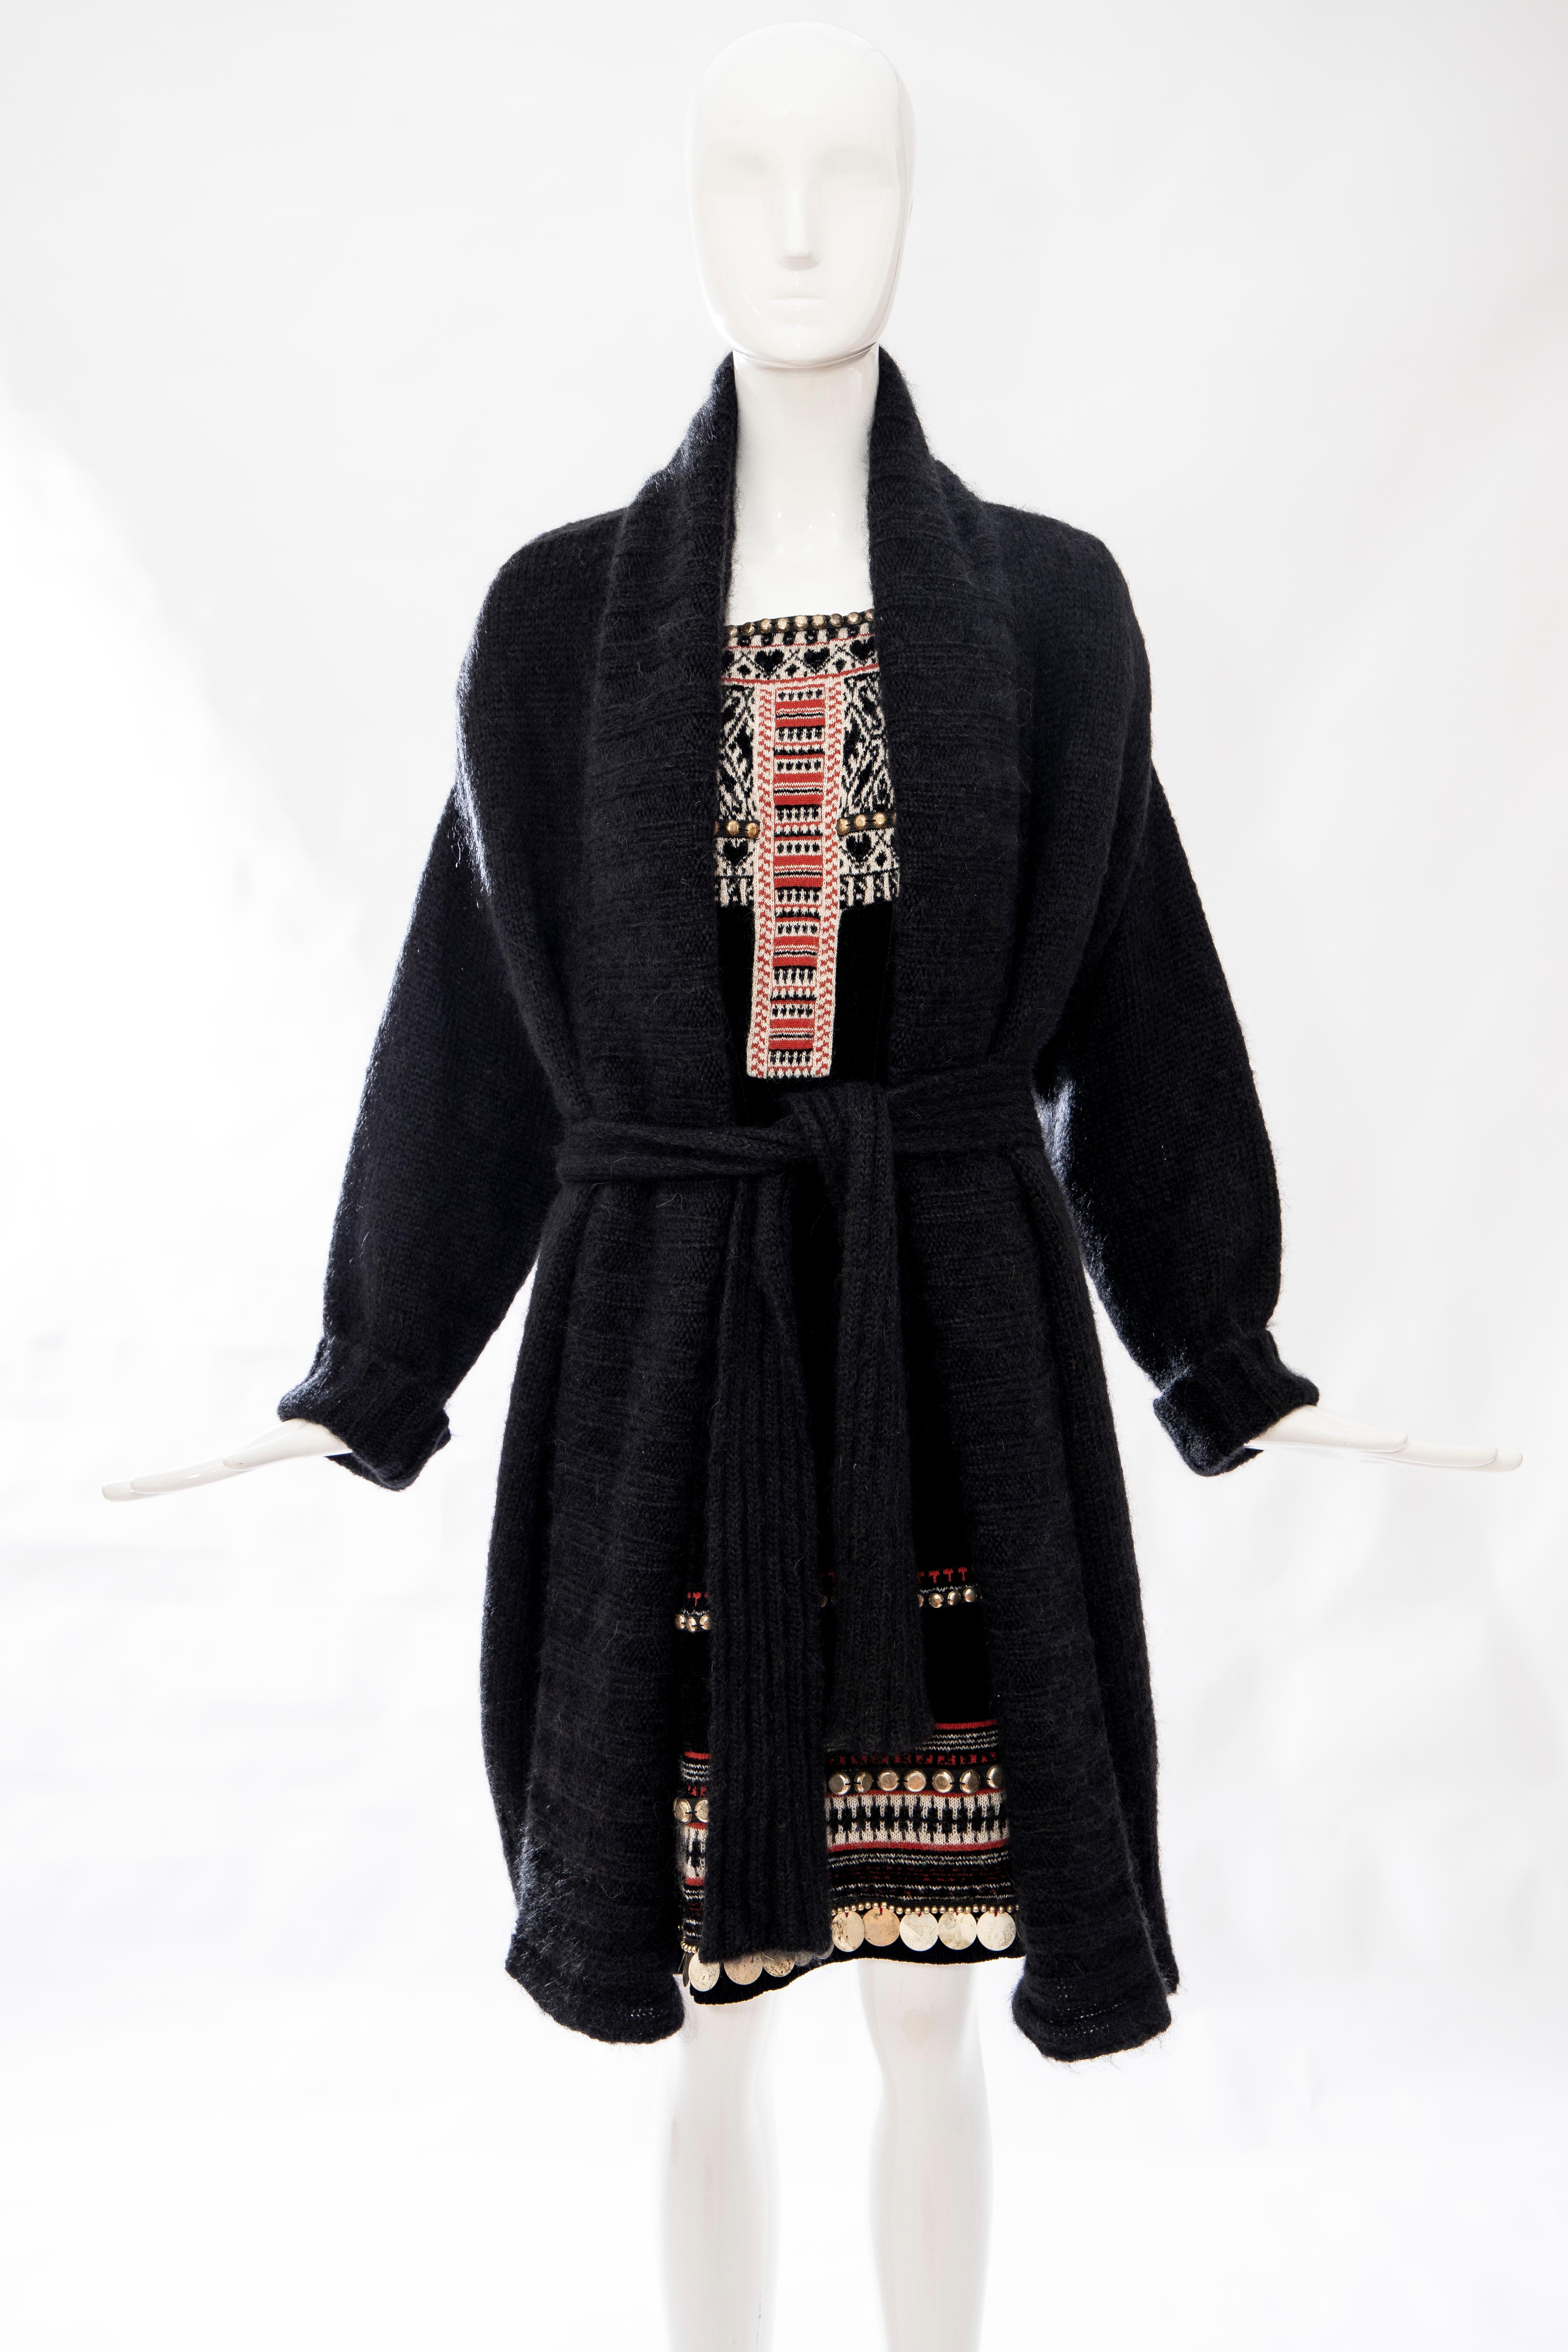 Jean Paul Gaultier Runway Mohair Knit Appliquéd Coins Sweater Dress , Fall 2010 For Sale 5